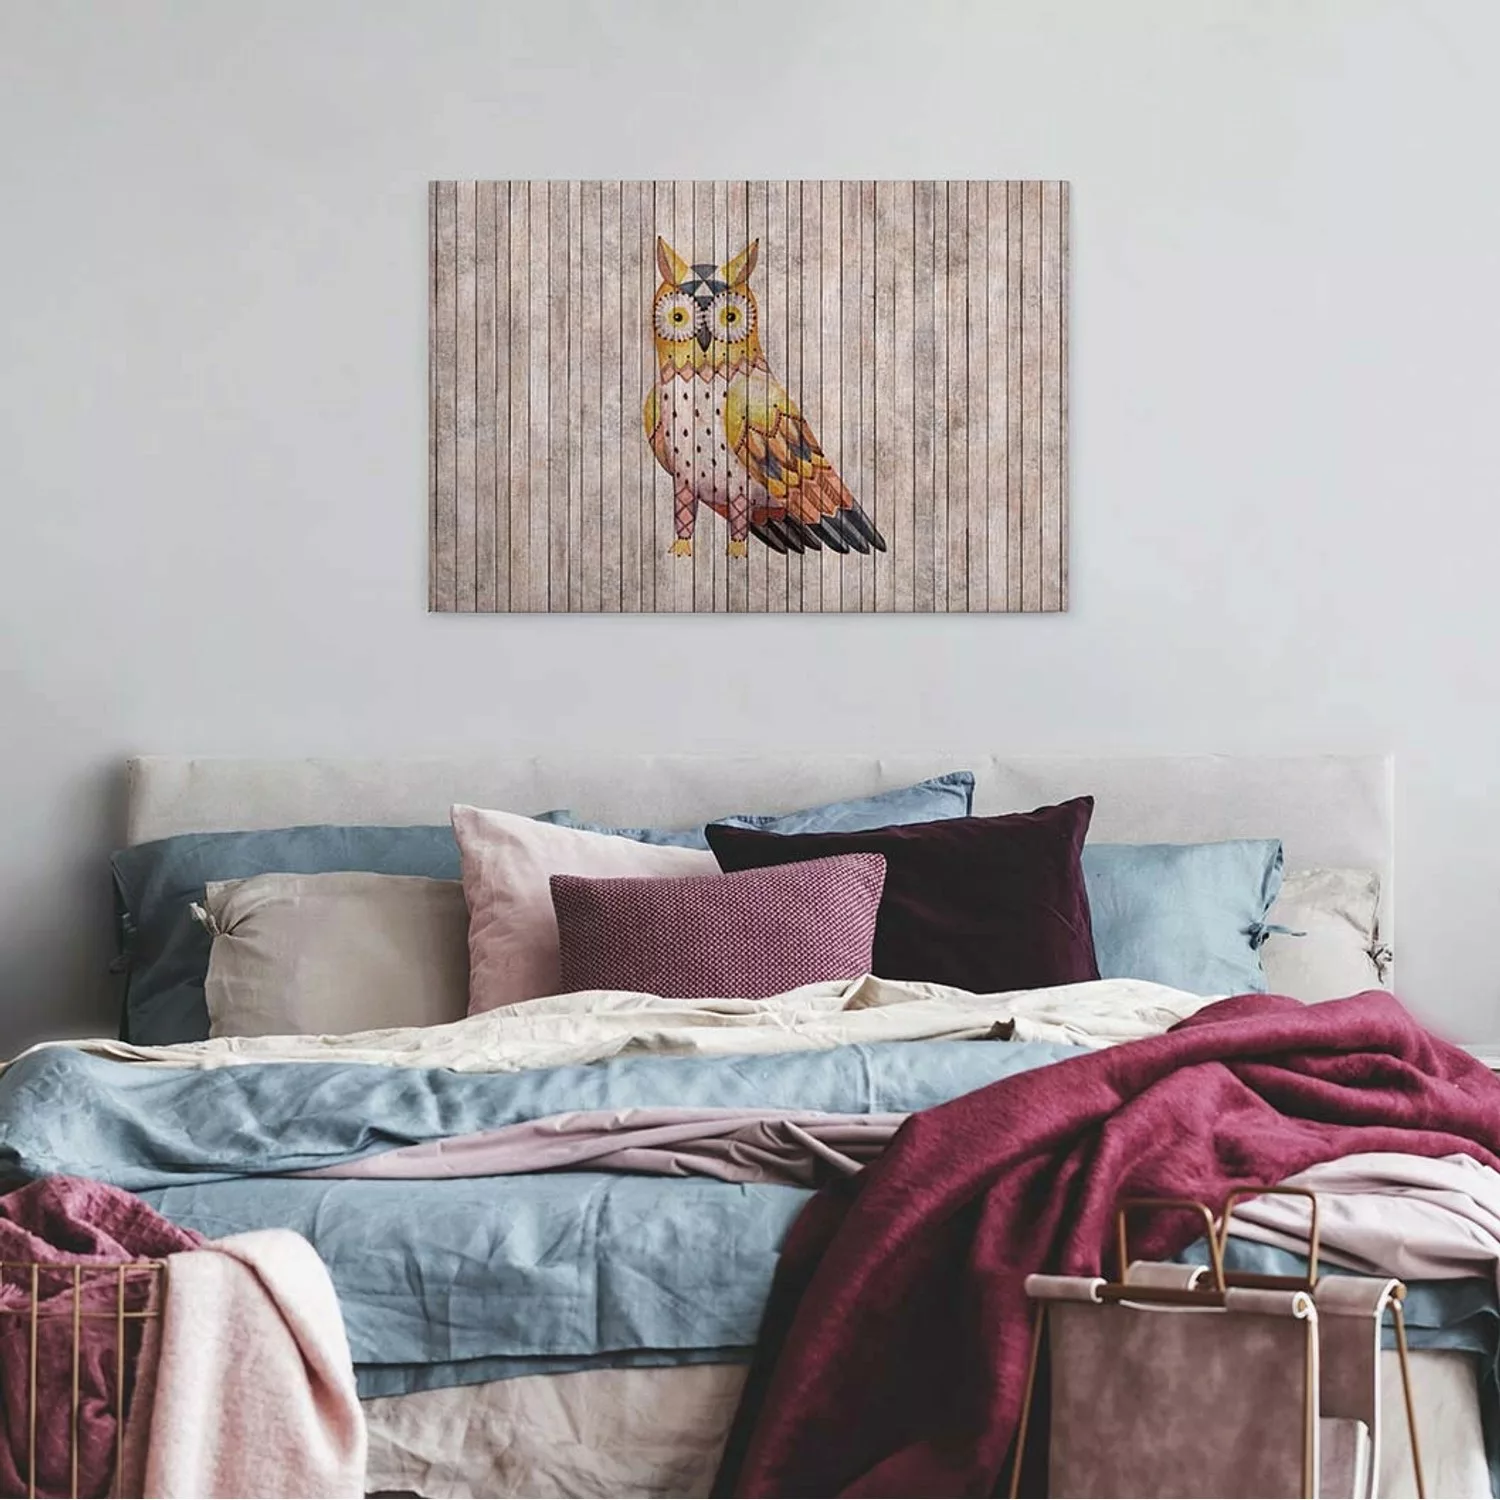 Bricoflor Holz Leinwand Bild Mit Fuchs Rustikales Wandbild Mit Fuchs Motiv günstig online kaufen